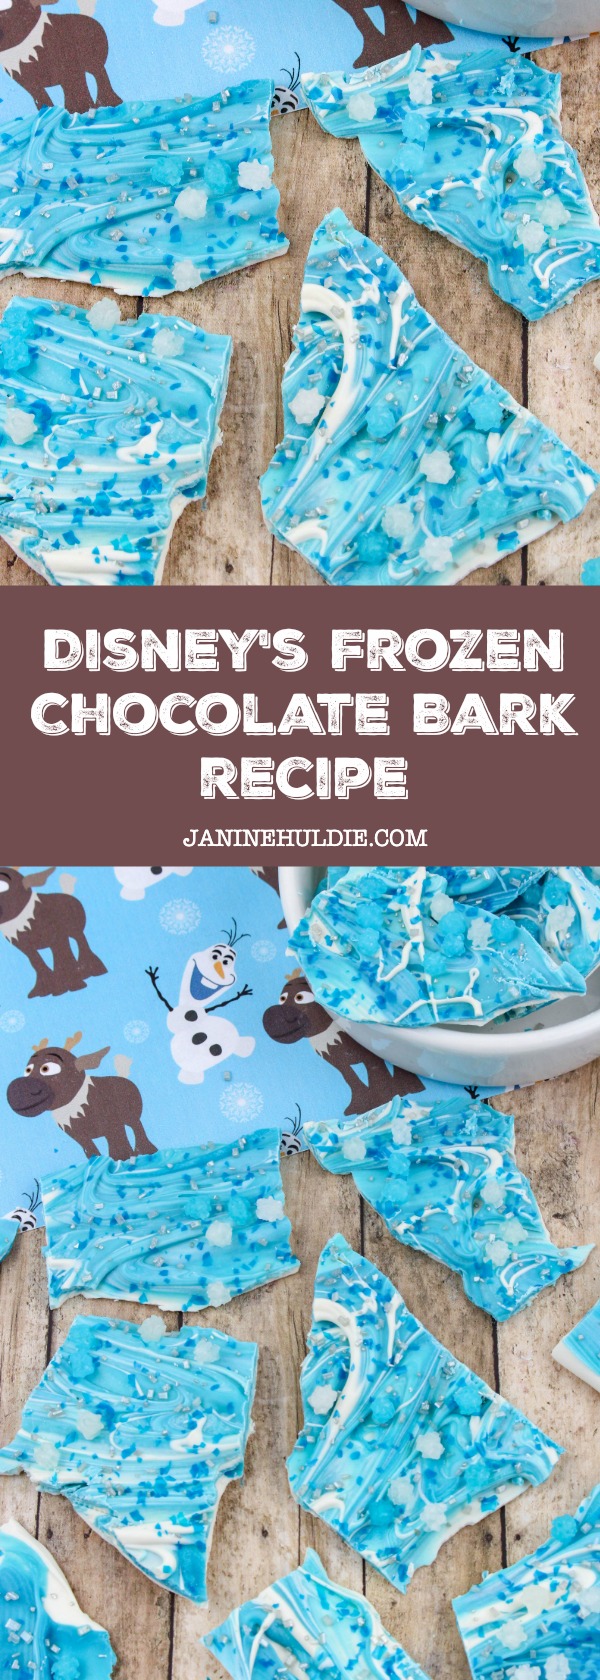 Disney's Frozen Chocolate Bark Recipe